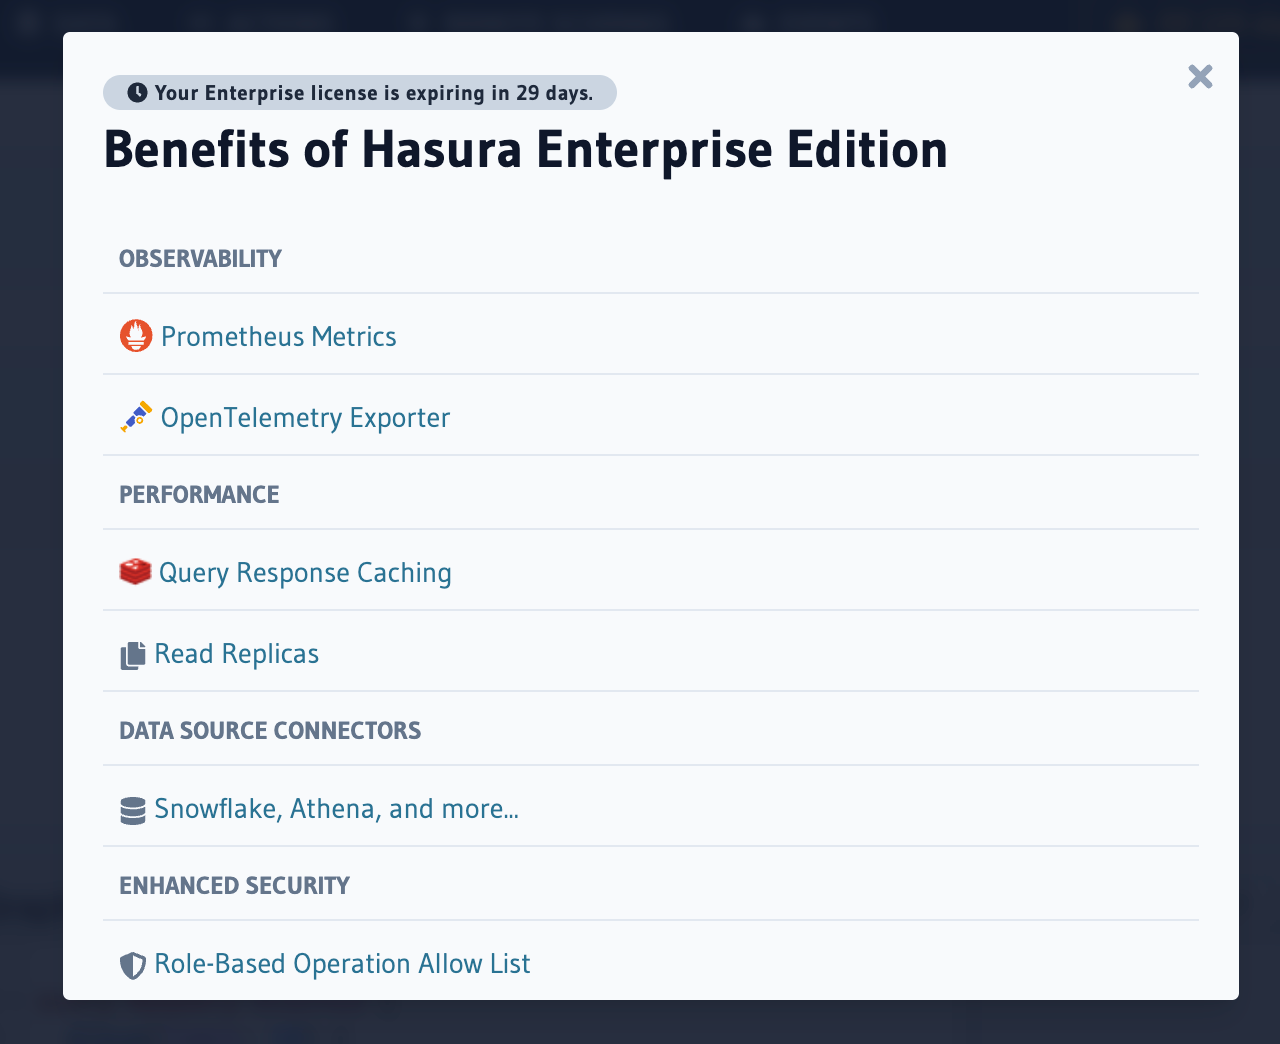 Benefits of Hasura Enterprise Edition